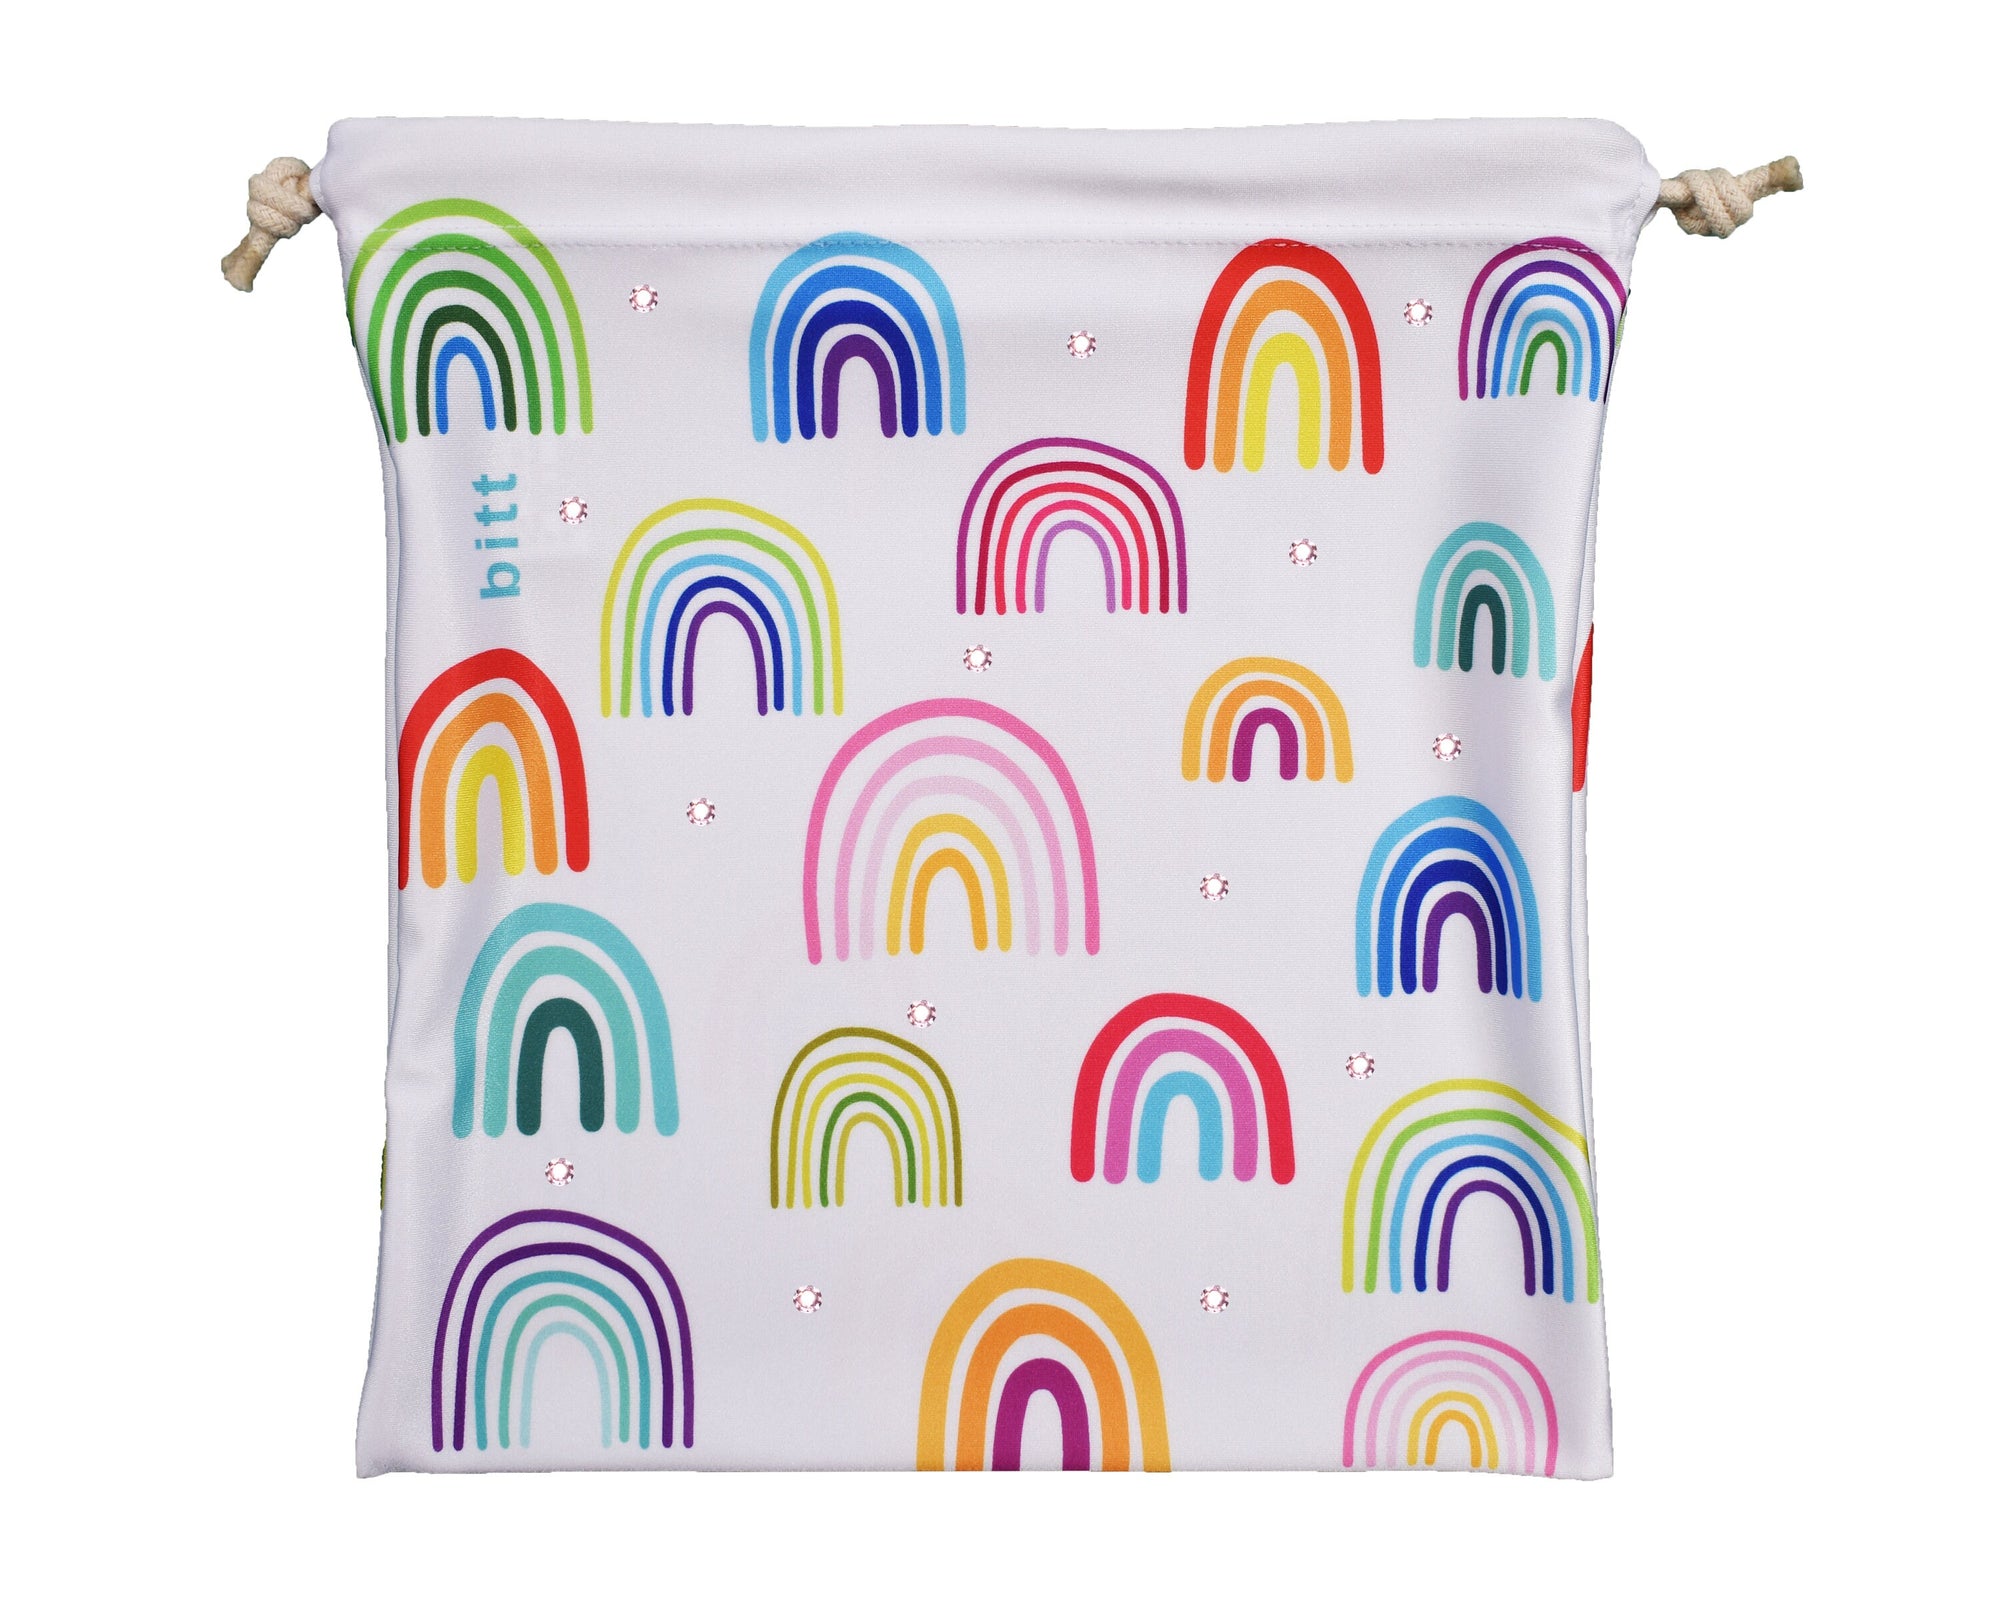 Gymnastics Grip Bag with Rainbows